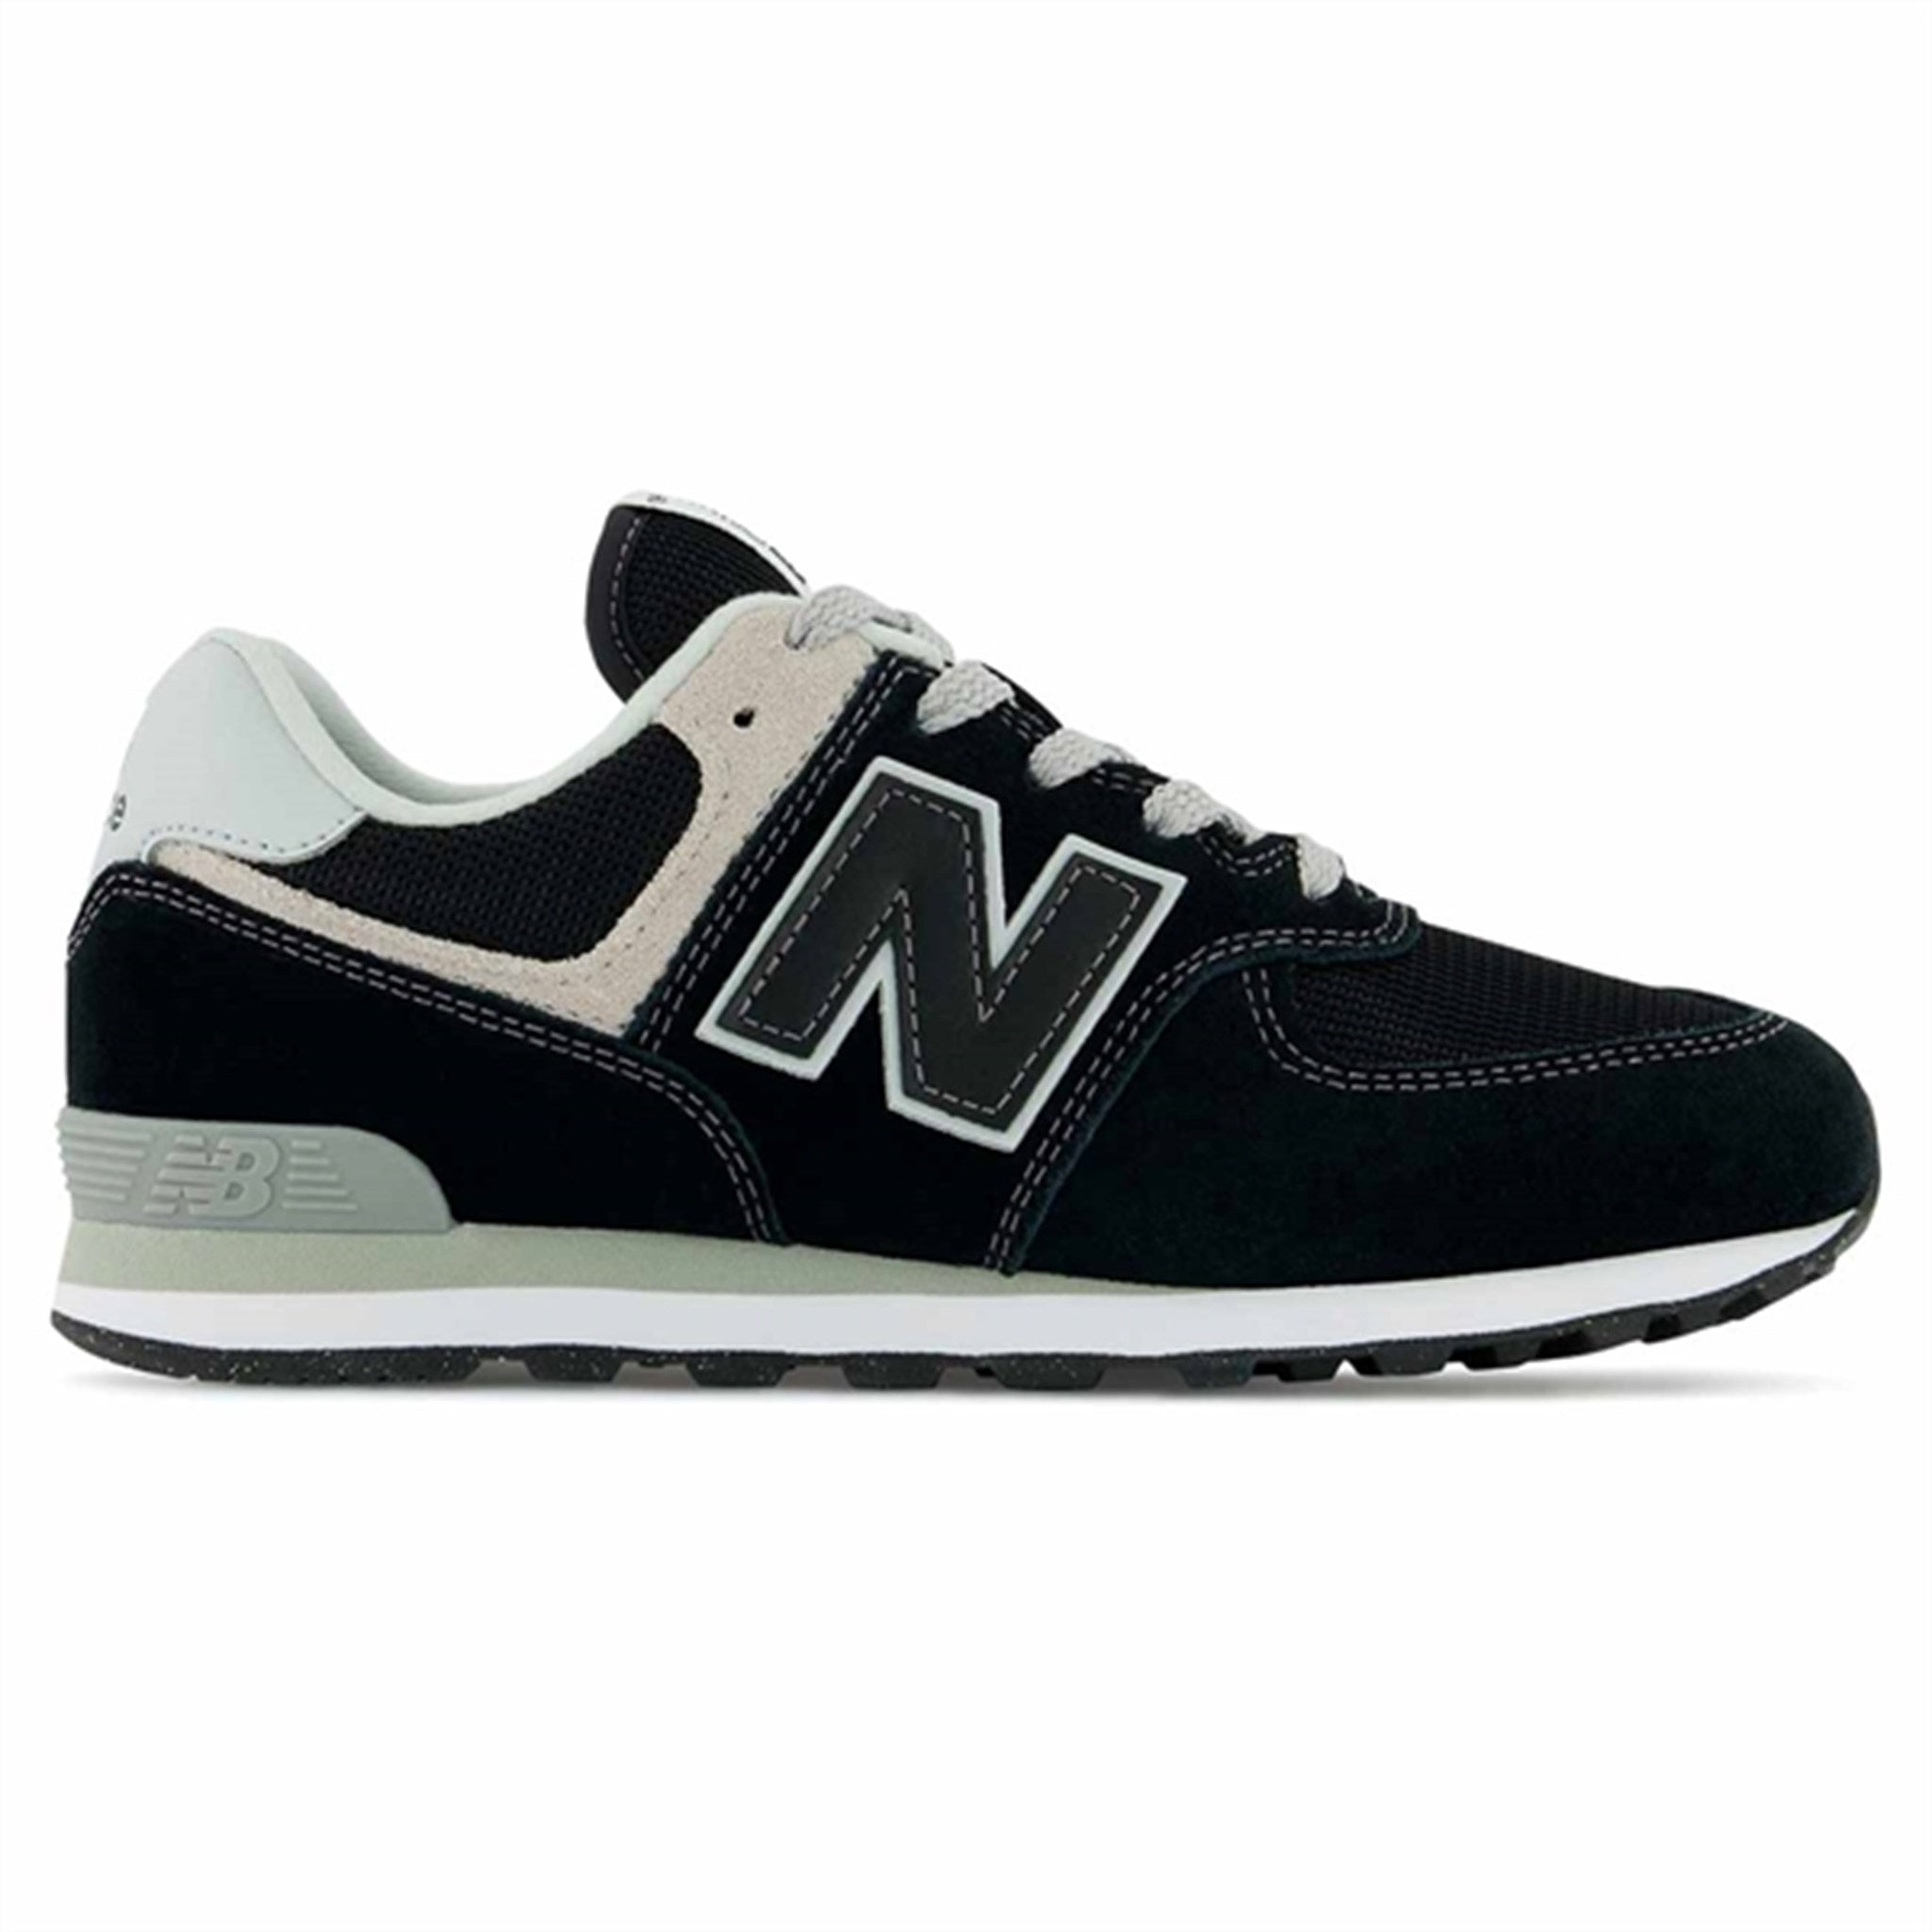 New Balance 574 Black/White Sneakers